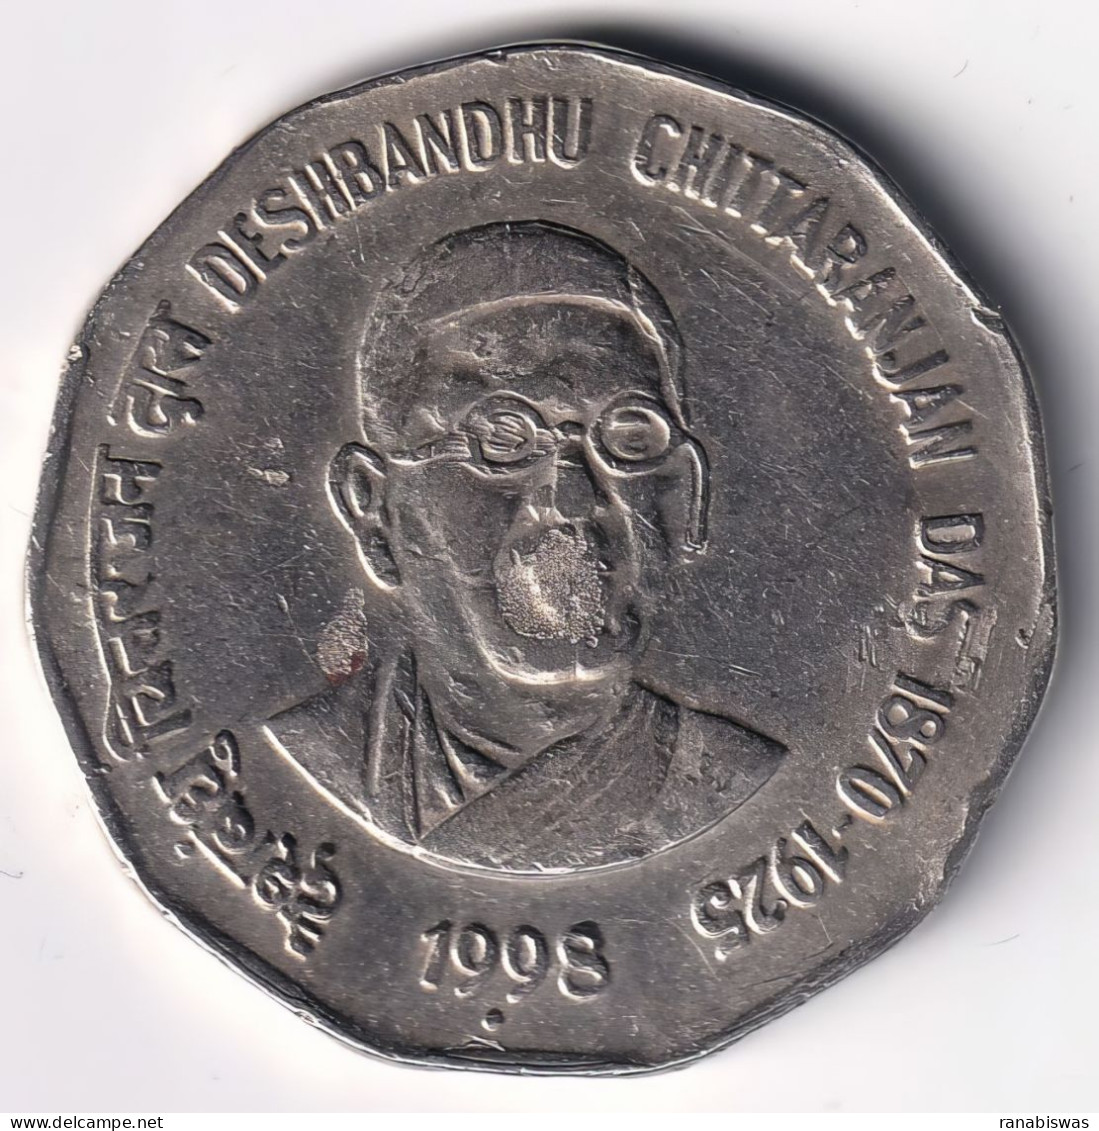 INDIA COIN LOT 79, 2 RUPEES 1998, CHITTARANJAN DAS, NOIDA MINT, XF - India